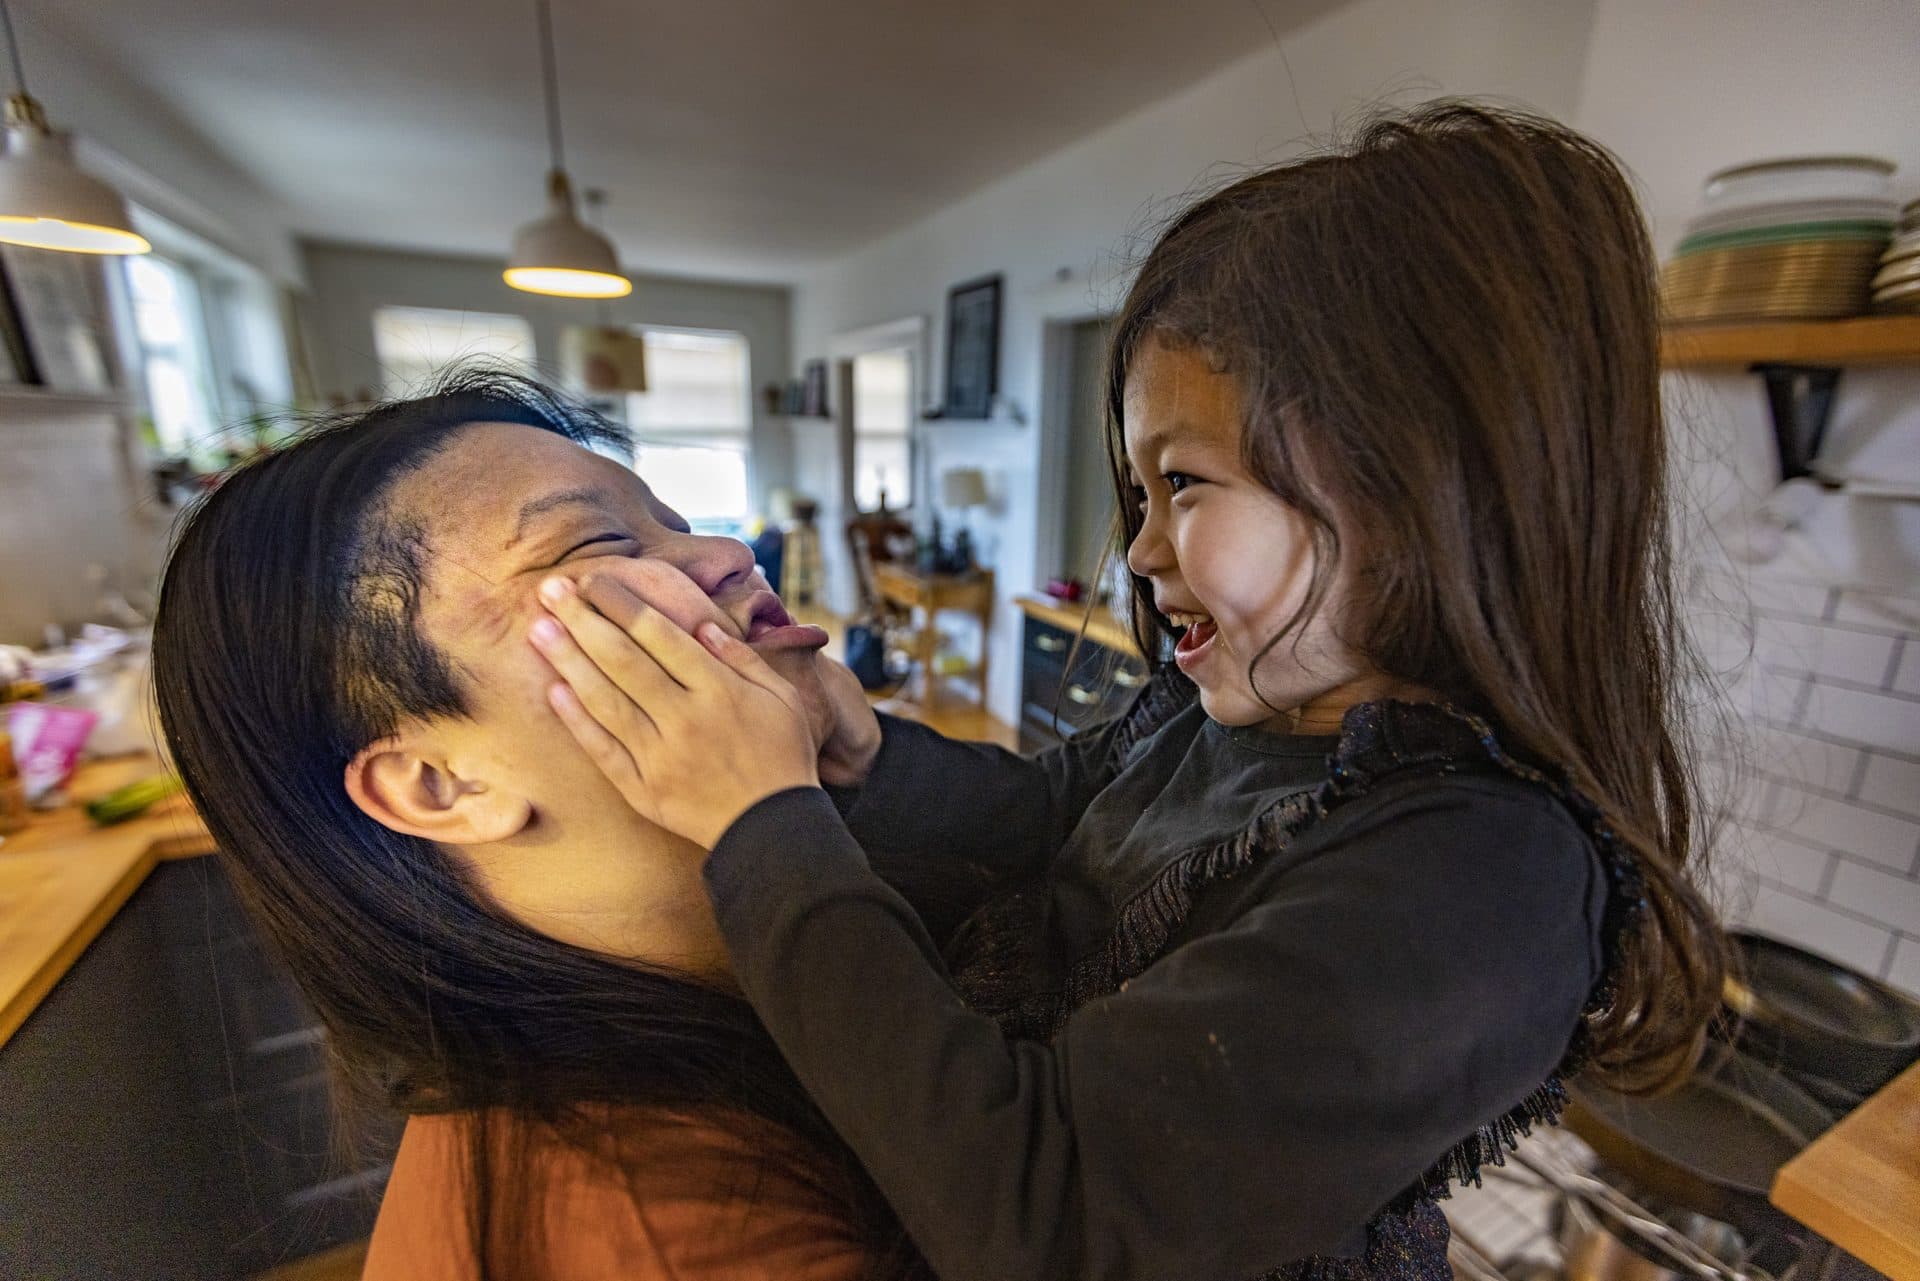 Mei Li’s daughter, Kira, smooshes Irene Li’s face as they play in the kitchen. (Jesse Costa/WBUR)